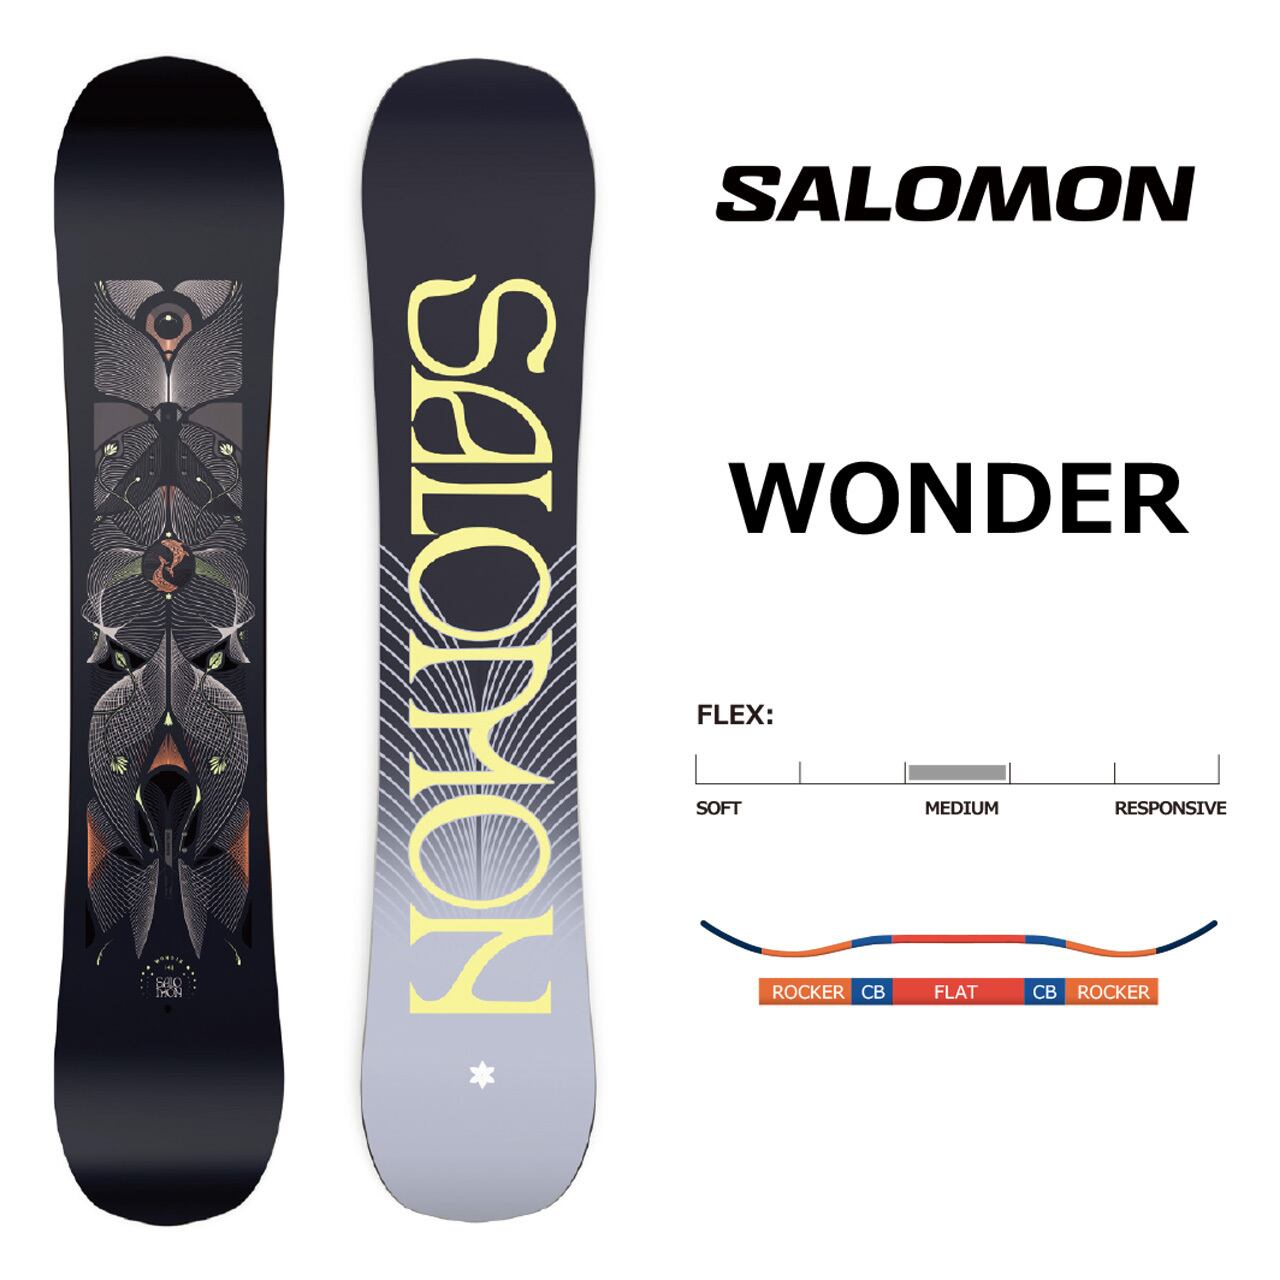 SALOMON スノボードWONDER ビンディング BURTON LEXA - スノーボード